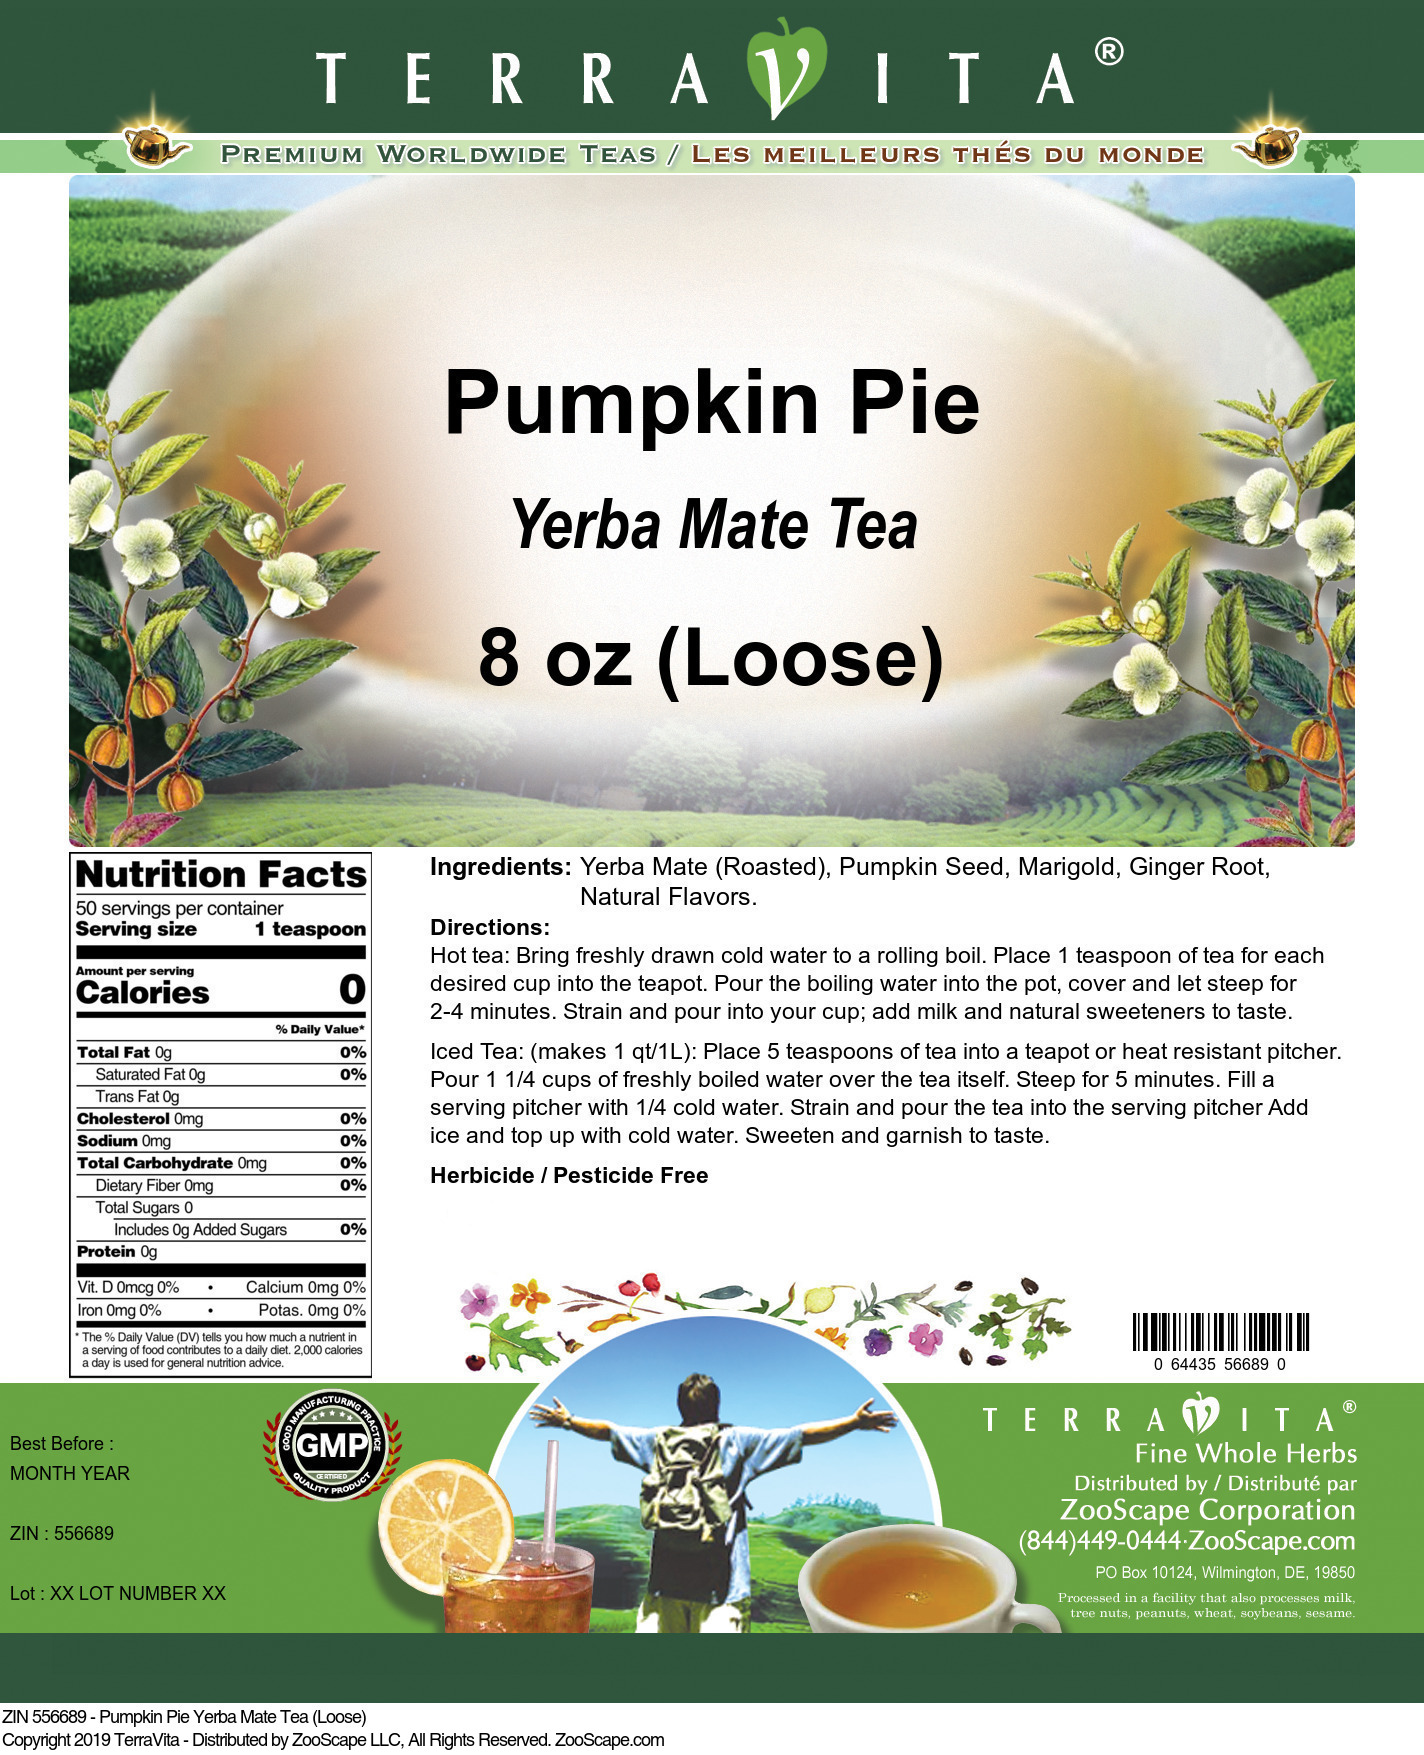 Pumpkin Pie Yerba Mate Tea (Loose) - Label